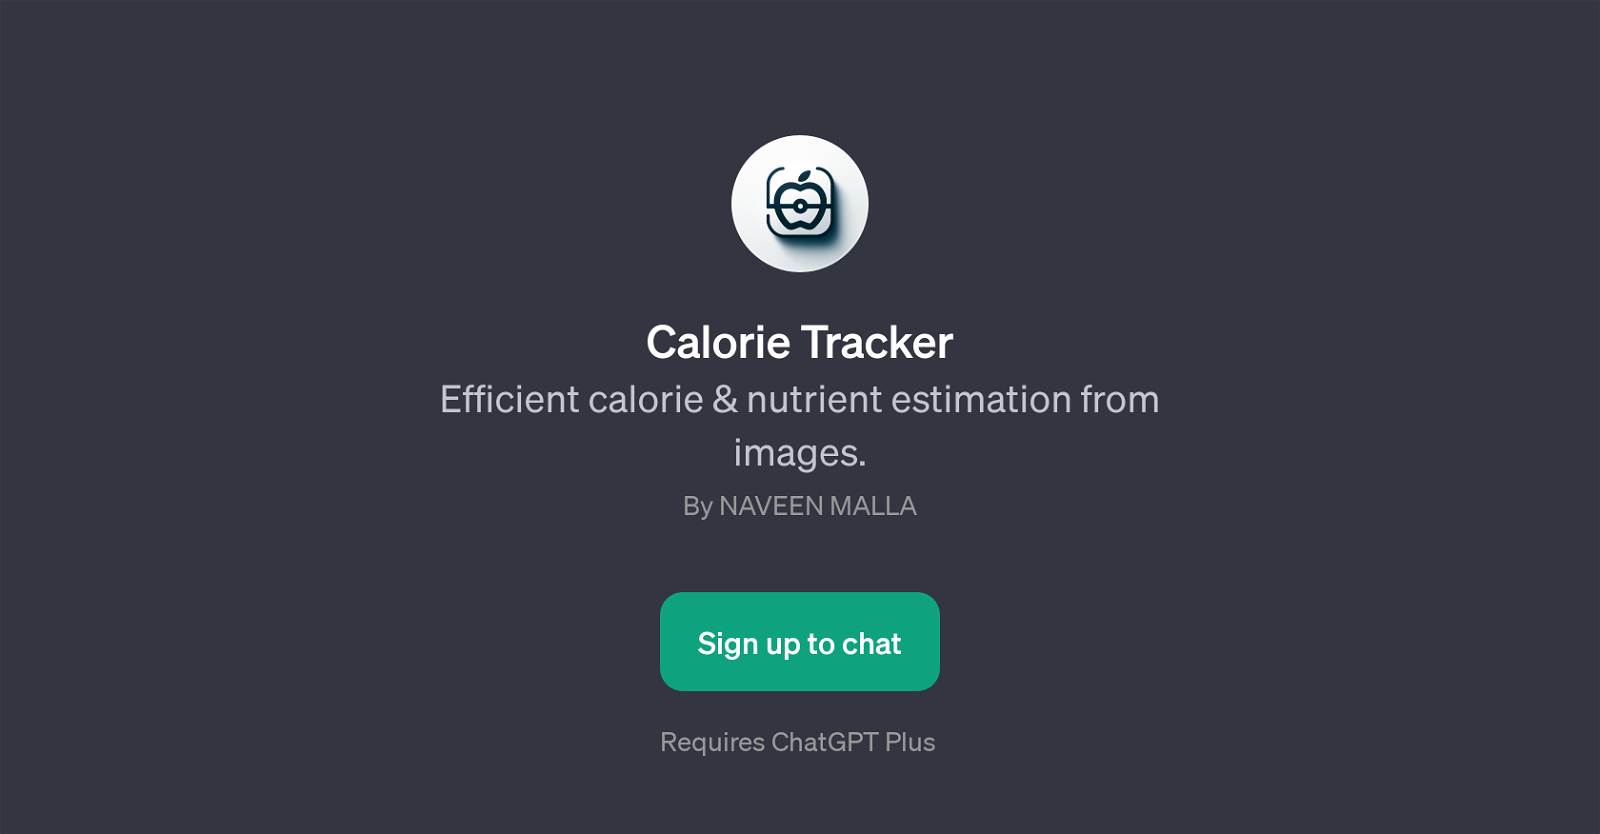 Calorie Tracker website